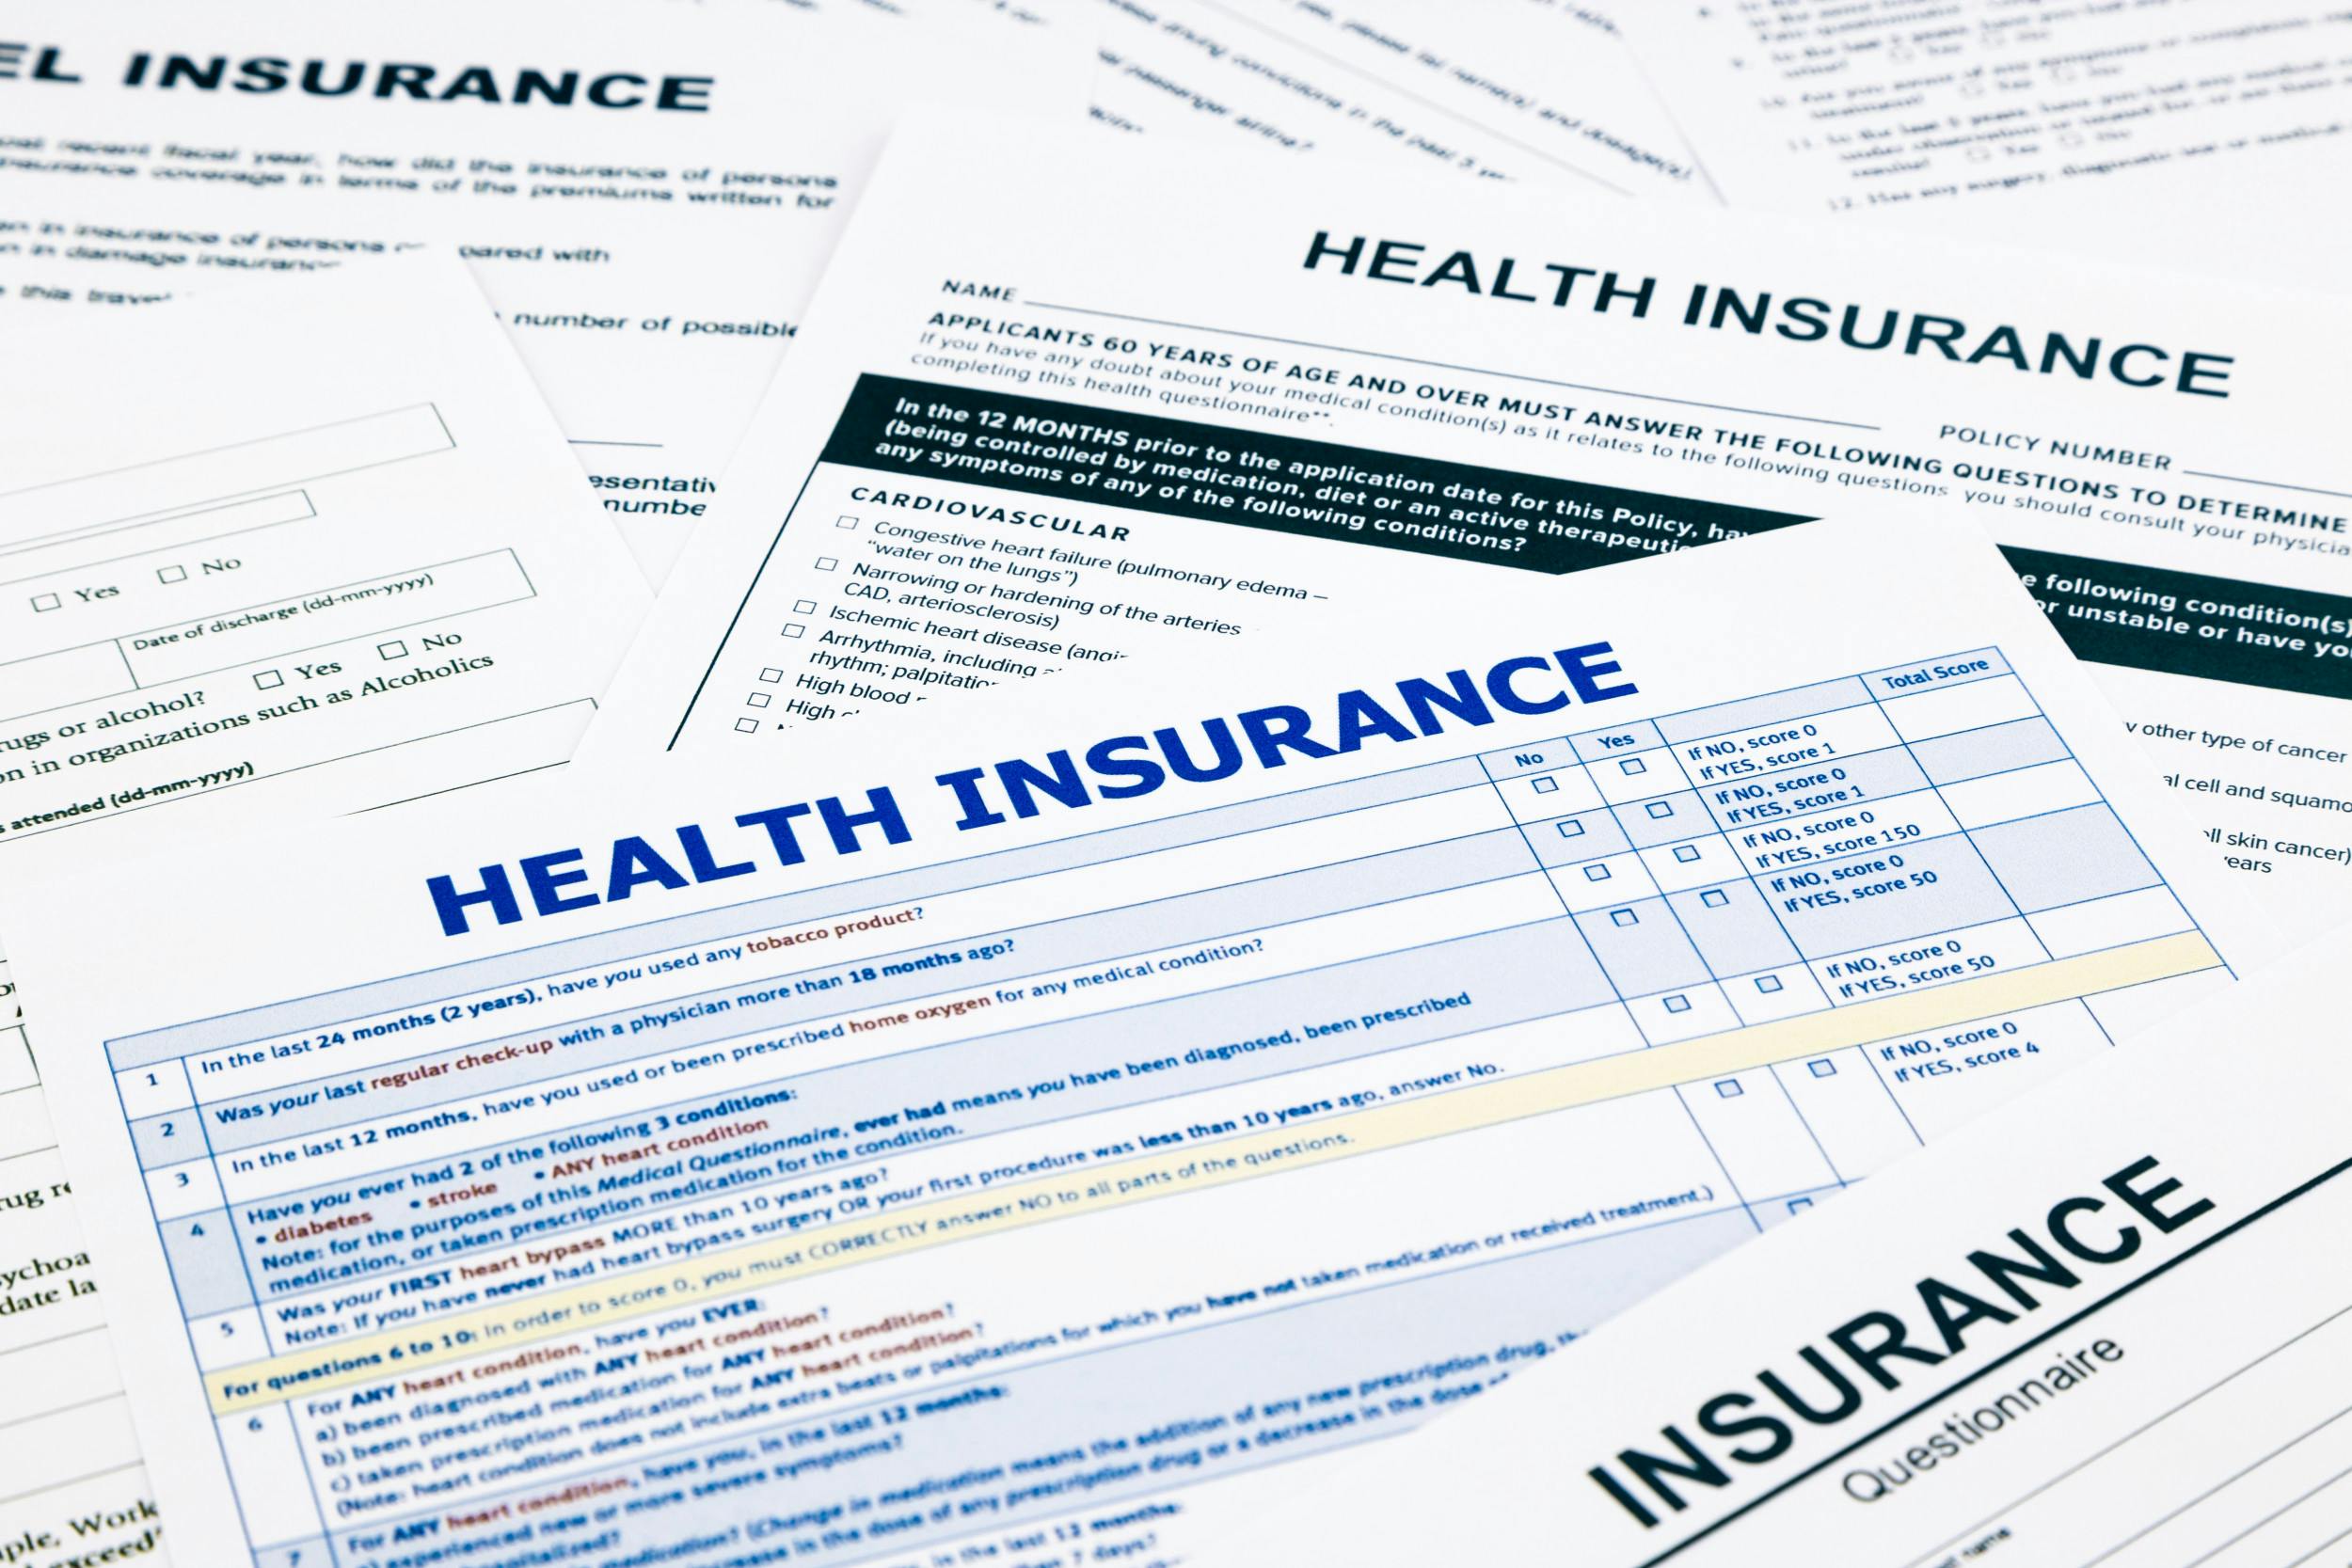 Reimagining Employer-Based Health Insurance